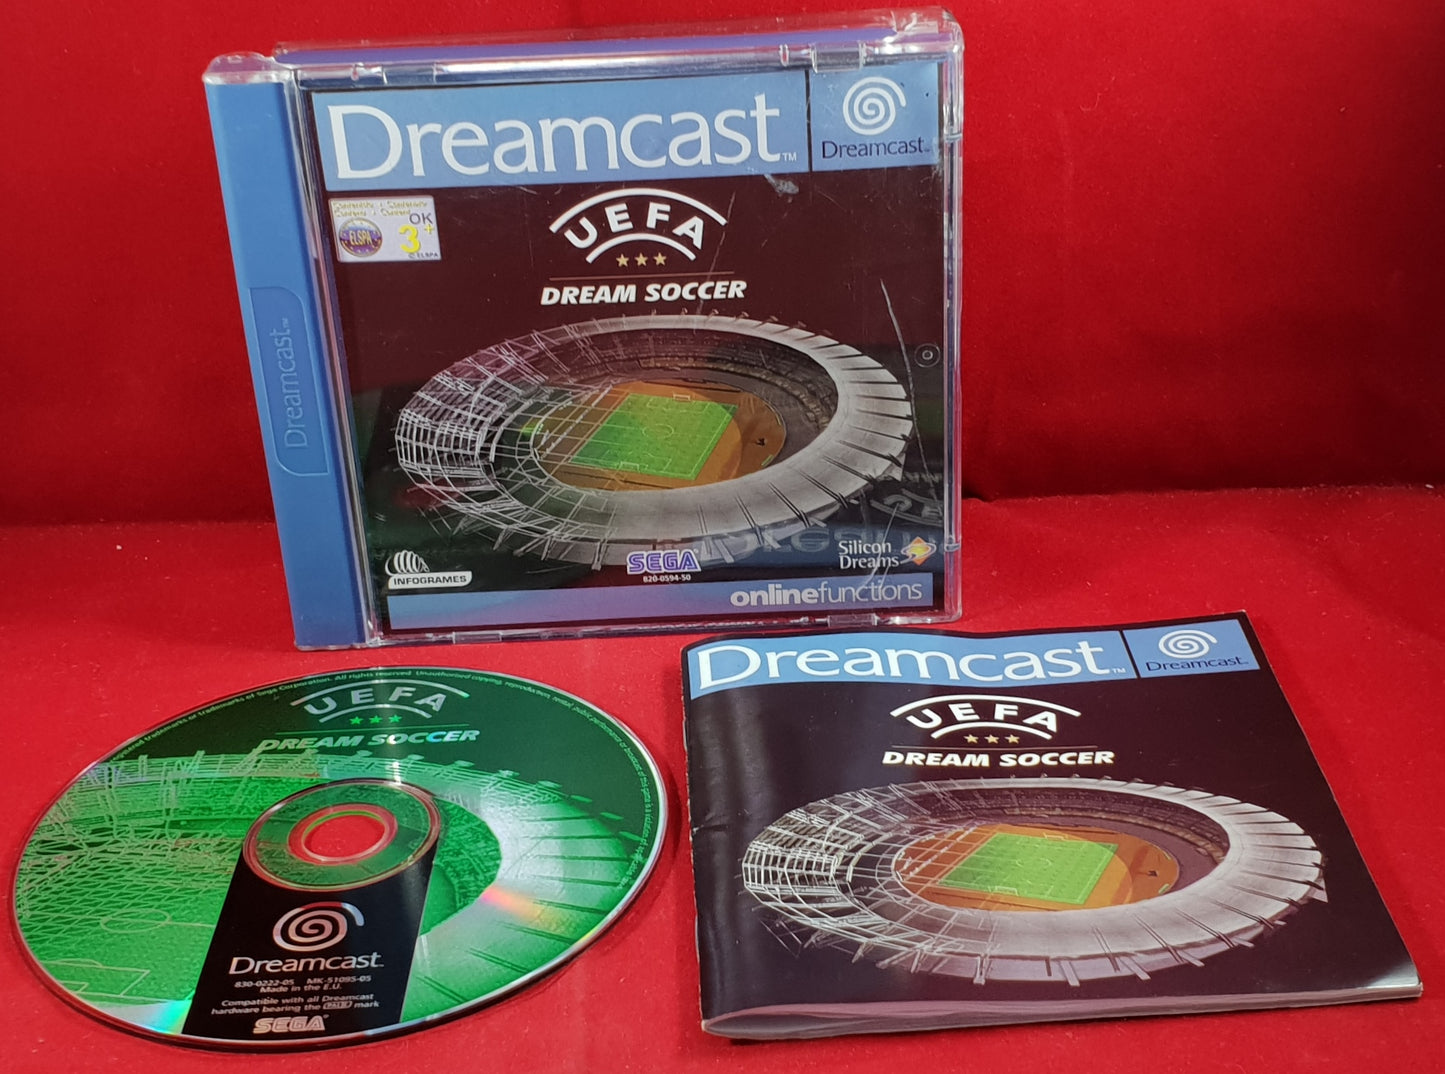 UEFA Dream Soccer Sega Dreamcast Game